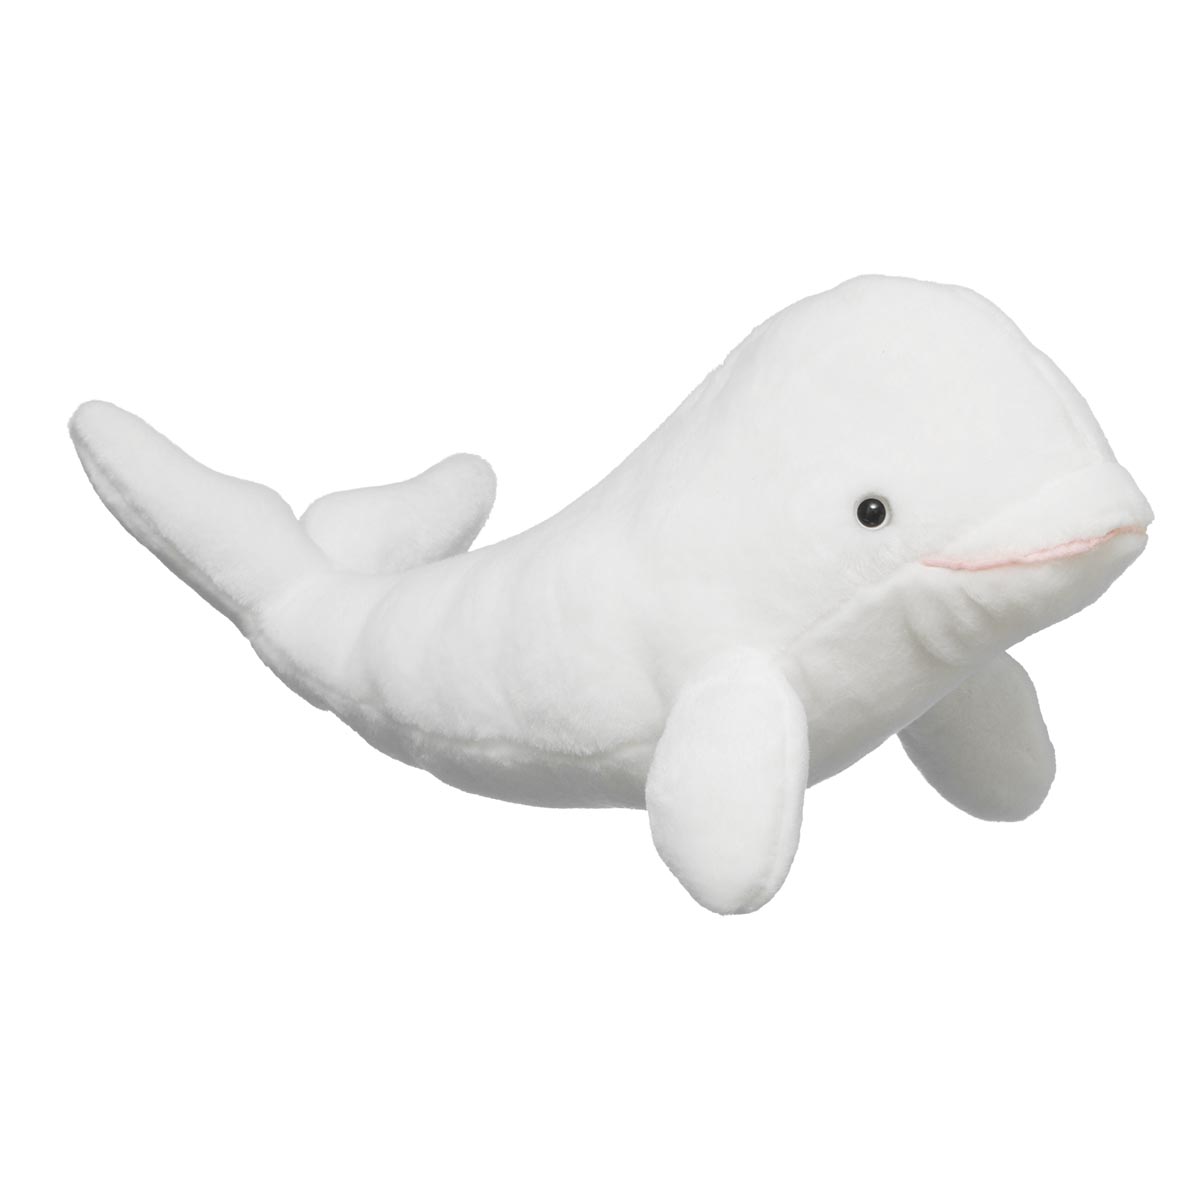 beluga whale plush toy